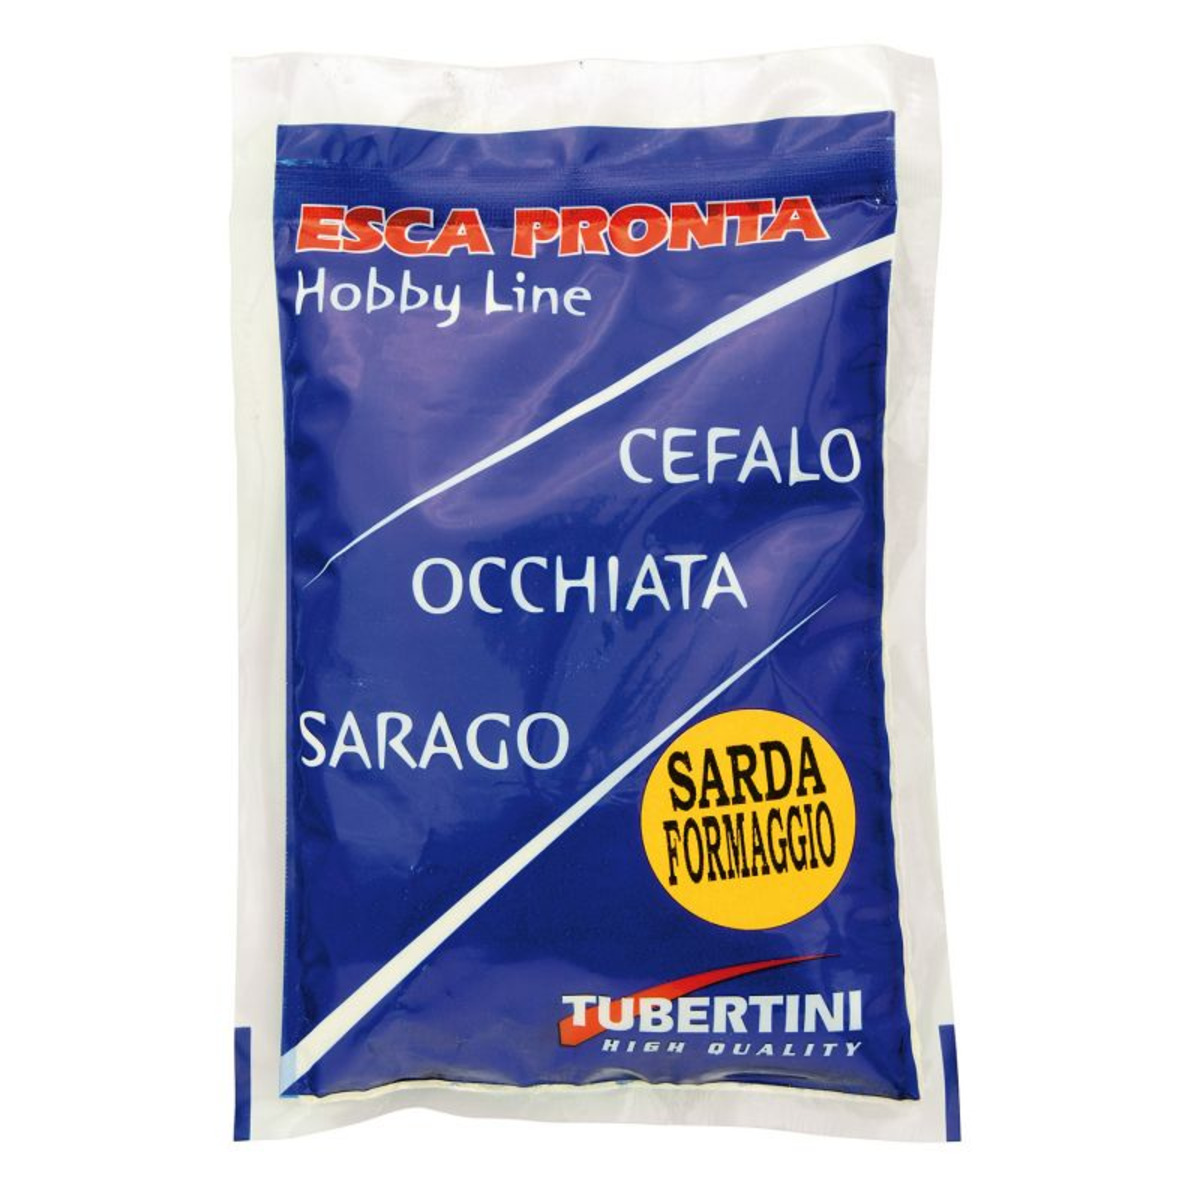 Tubertini Esca Pronta al Formaggio e Sarda Hobby Line - 150 g - Aroma  Formaggio - Sarda     